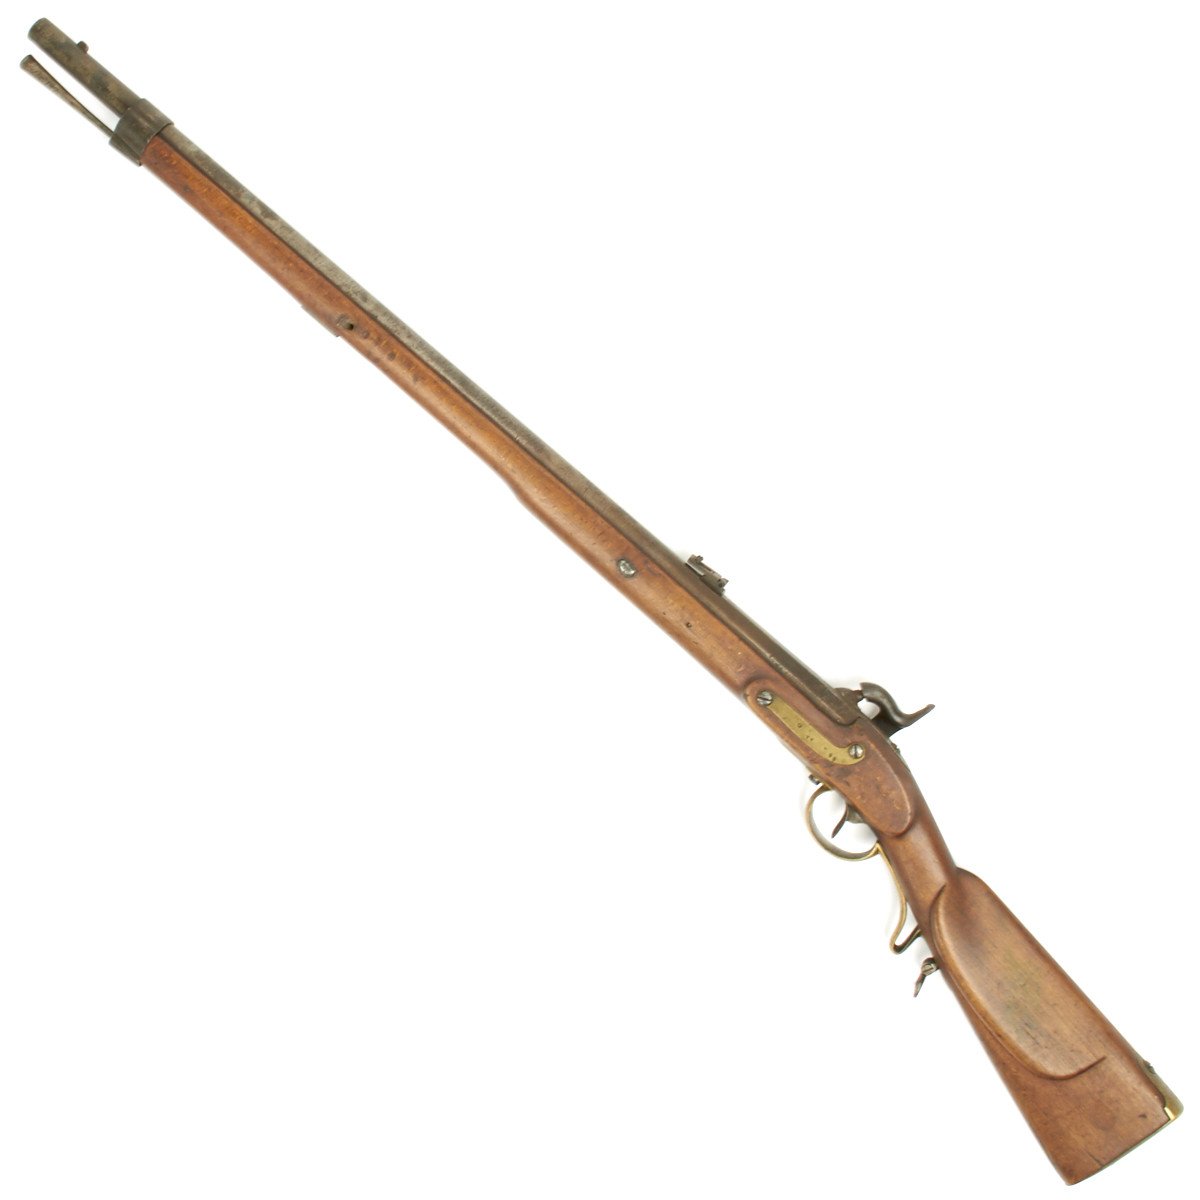 Muster International Kammerbuchse Rifle Austro-Hungarian Original Jäger with – Au 1849 Military Antiques